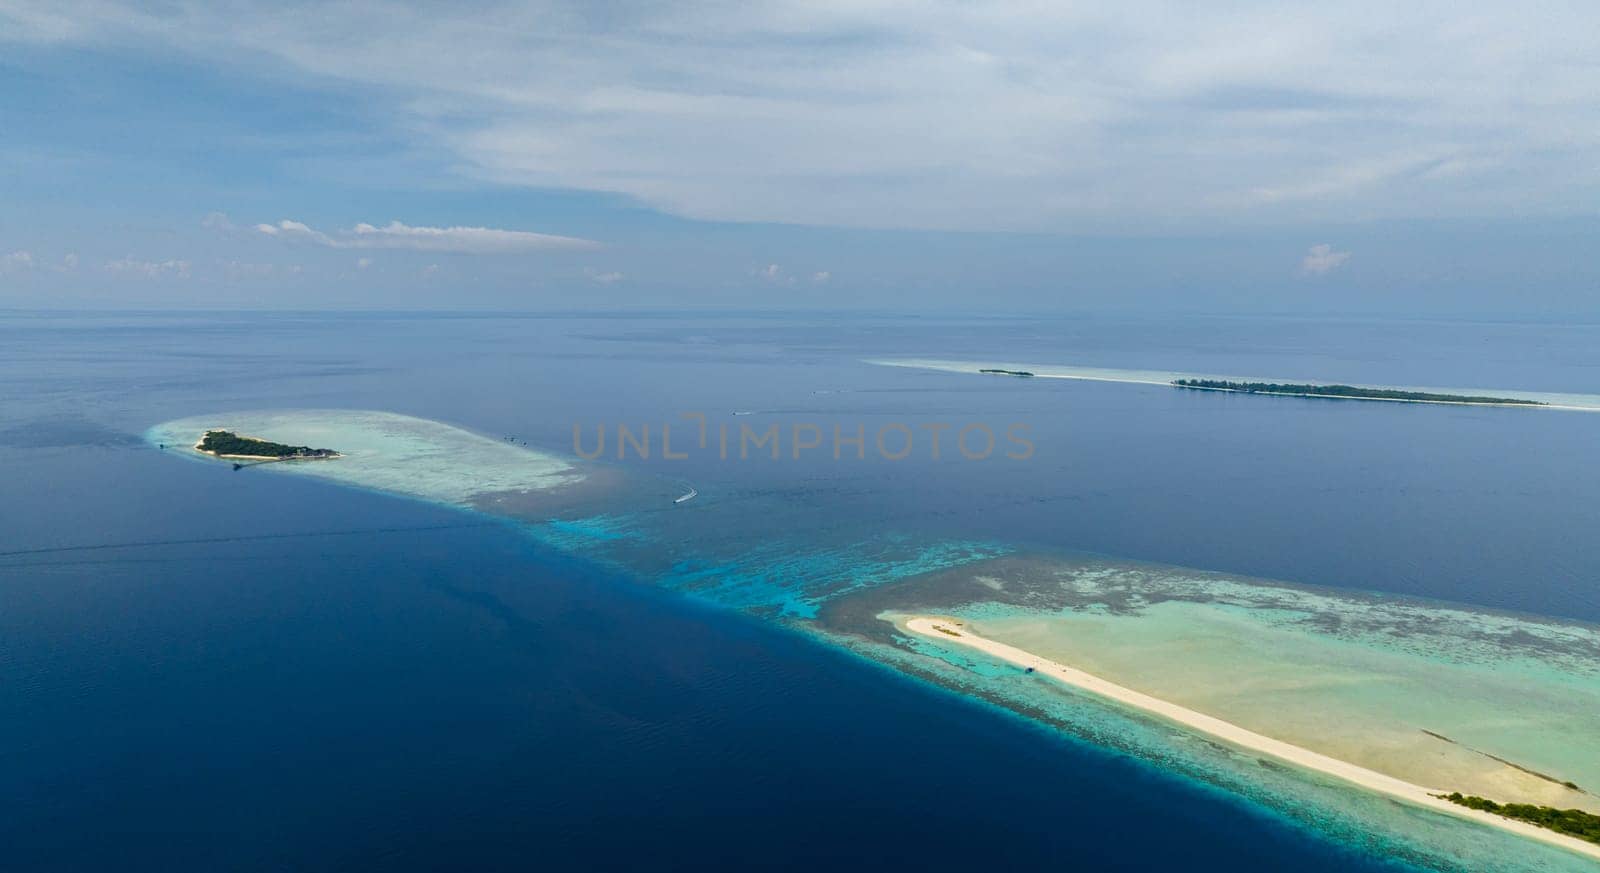 Top view of tropical islands on the atoll and coral reef. Timba Timba islet. Tun Sakaran Marine Park. Borneo, Sabah, Malaysia.